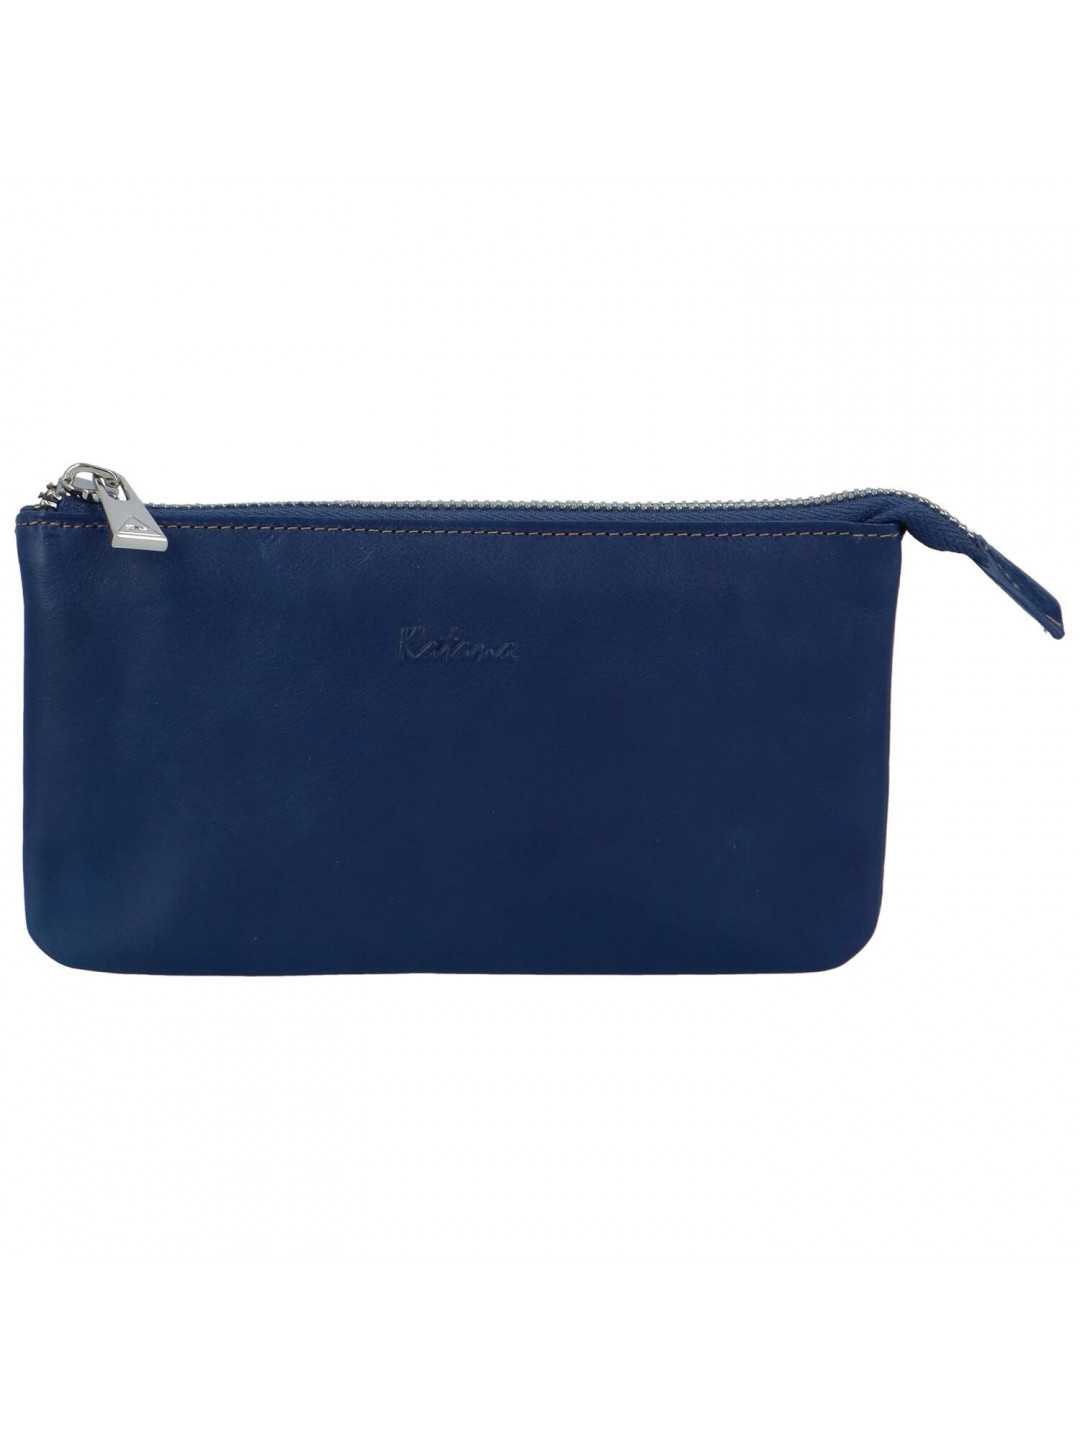 Dámská kožená peněženka modrá – Katana Sialla